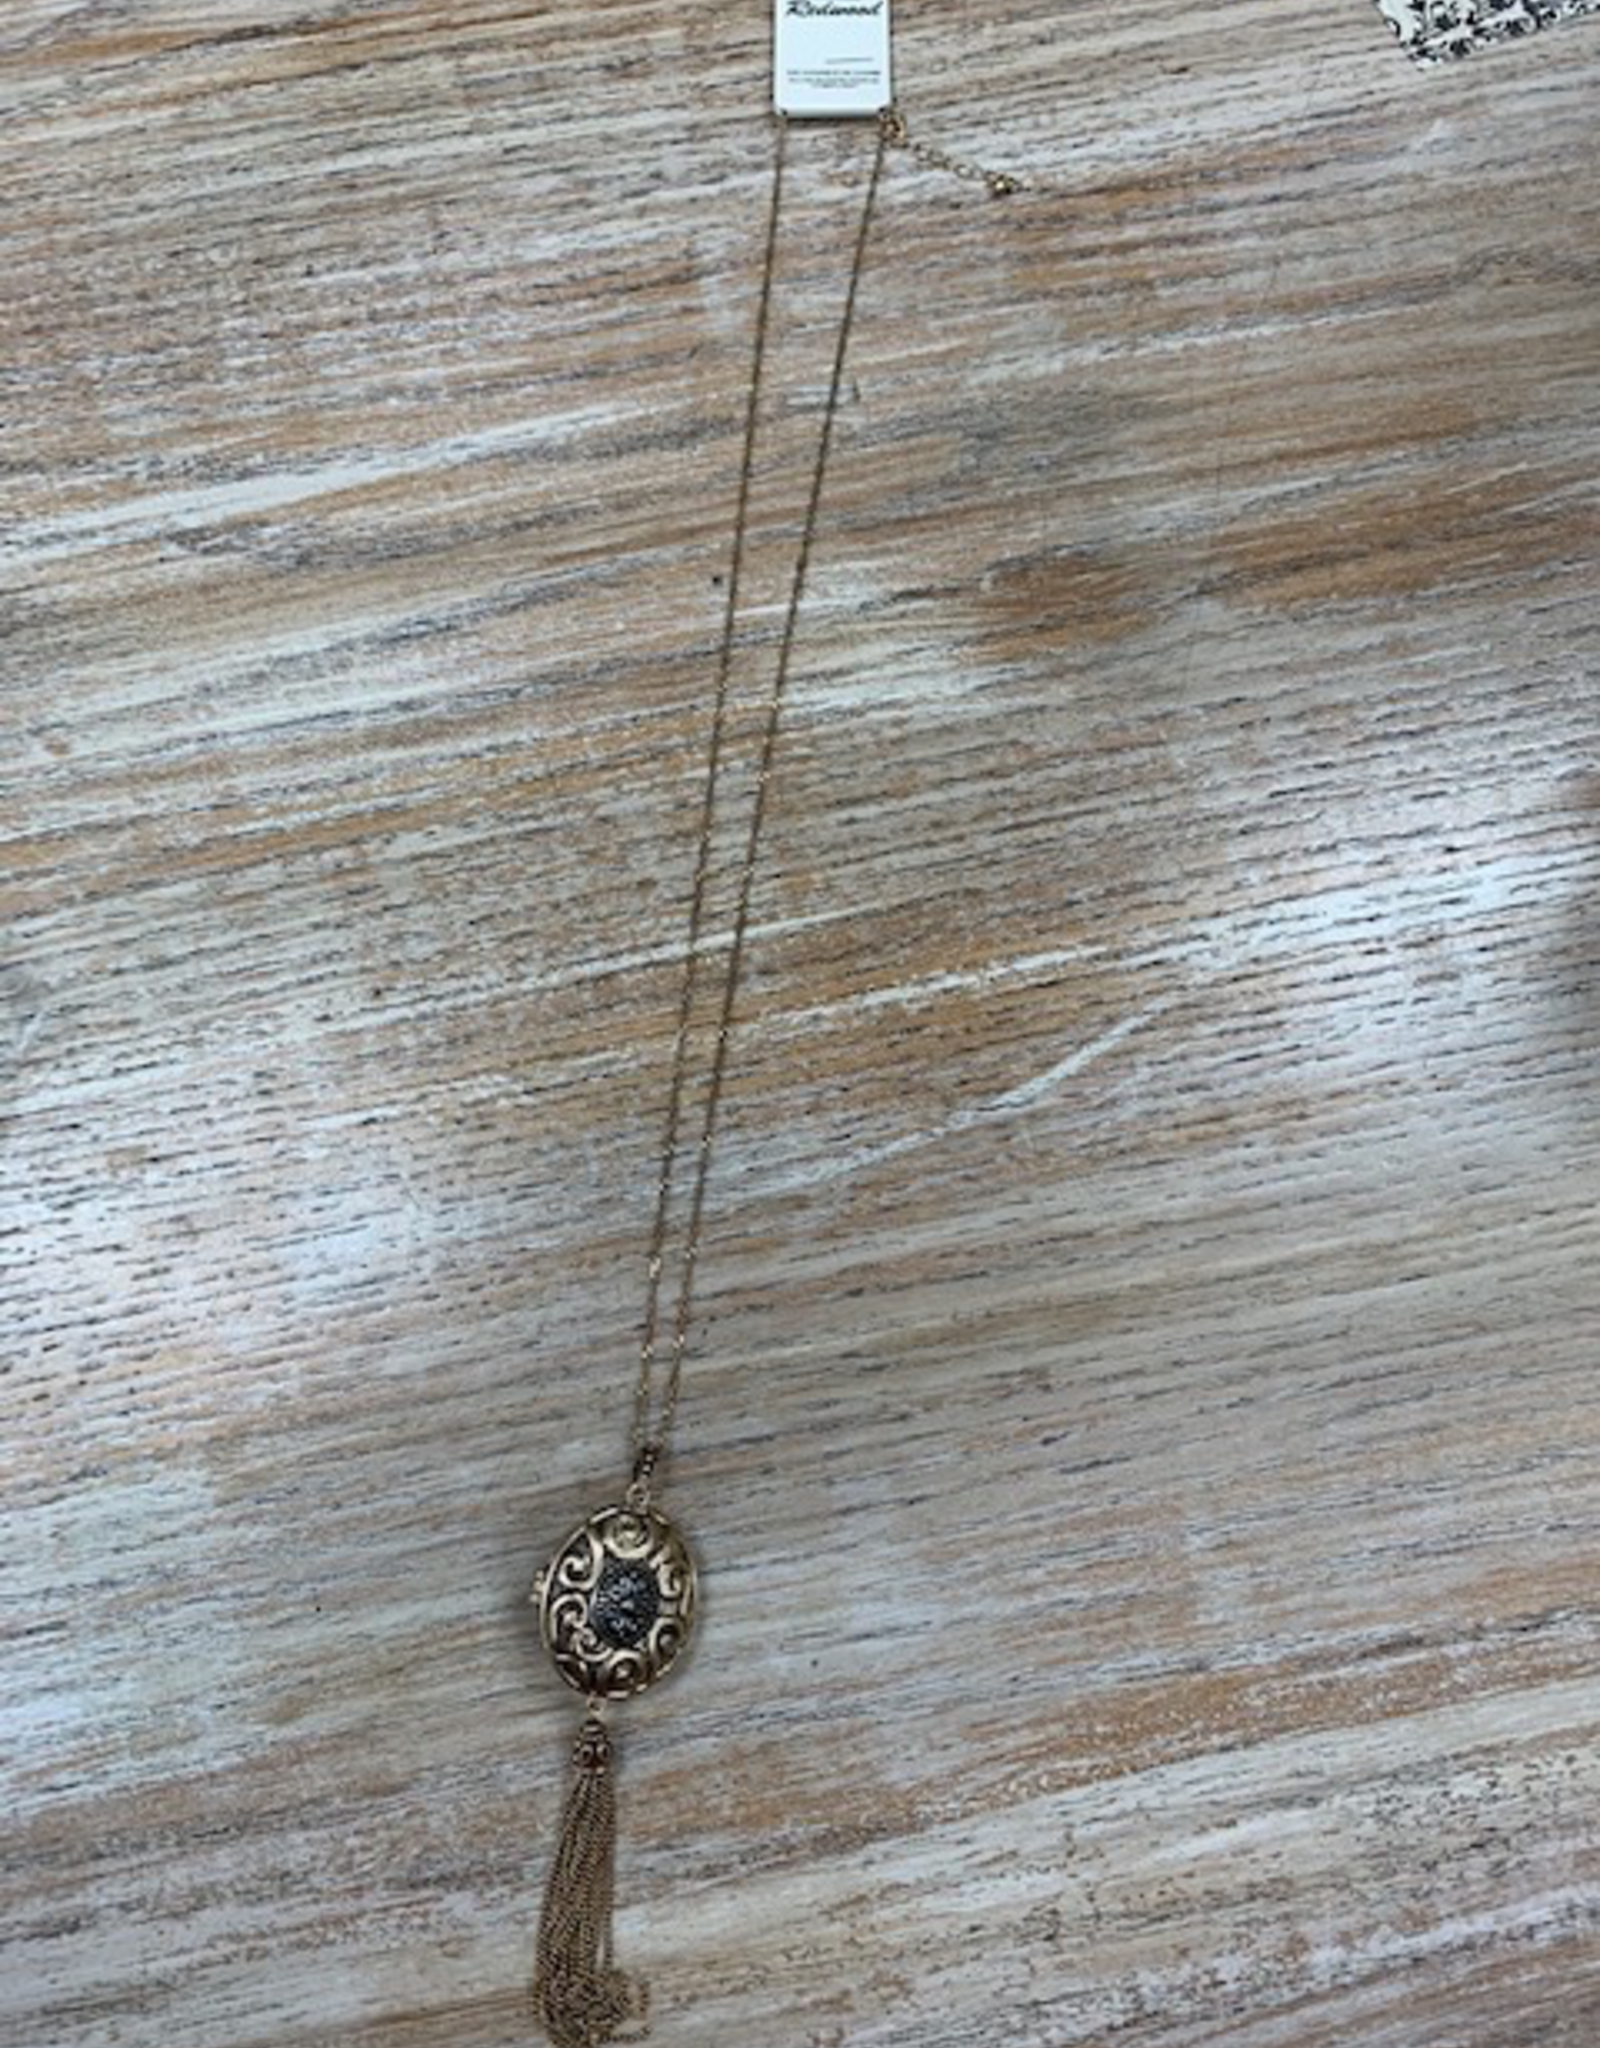 Jewelry Gold Locket Tassel Necklace